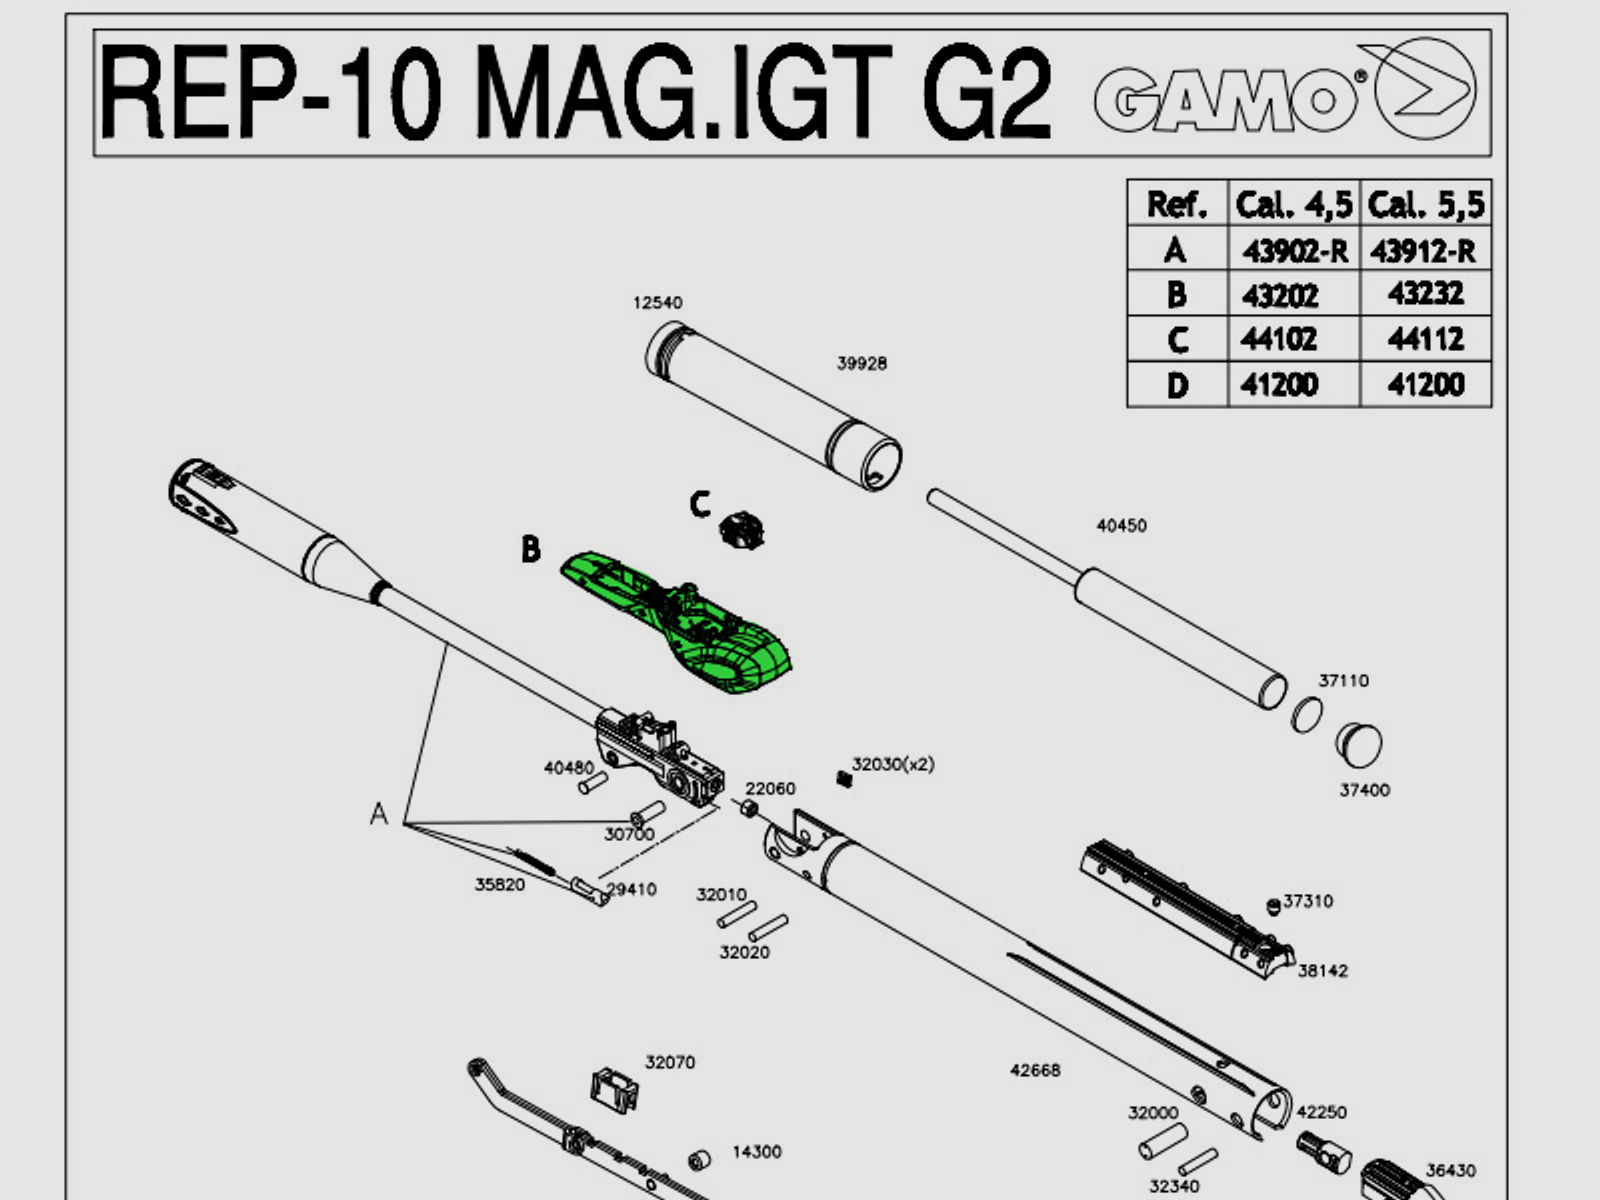 MagazingehĂ¤use (Lademechanismus) fĂĽr Luftgewher Gamo Replay 10 Magnum IGT Gen2 Kaliber 5,5 mm